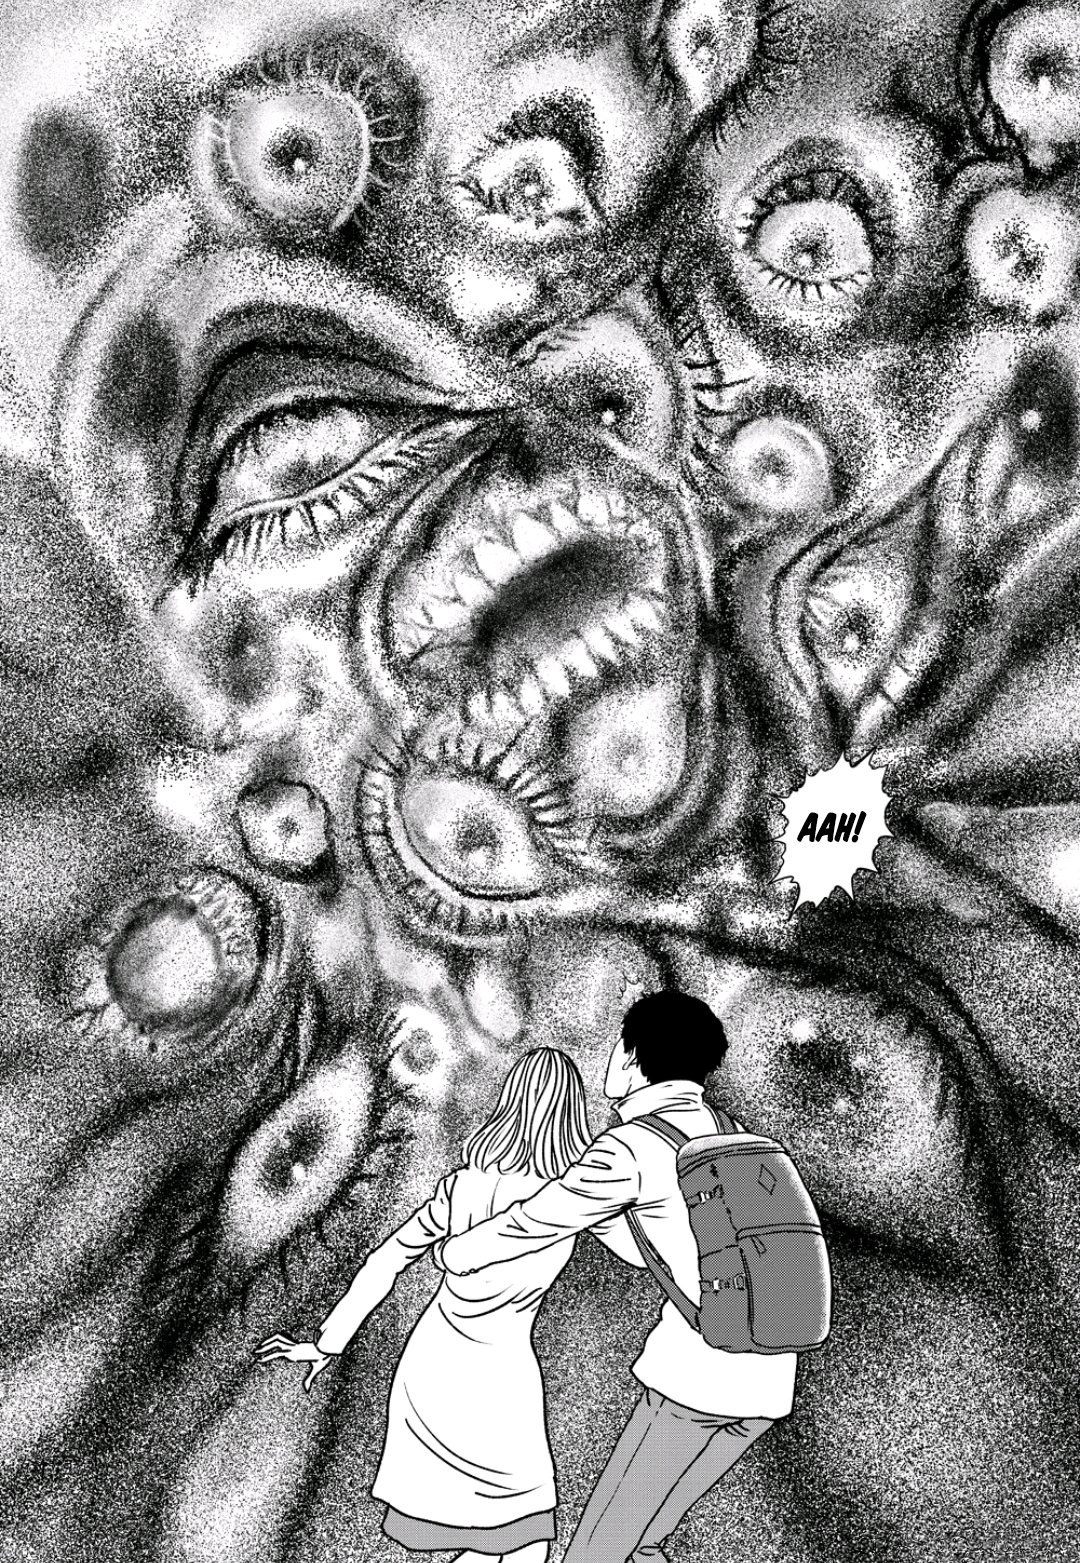 Manga Horror Art on Twitter: "The liminal zone by Junji Ito  https://t.co/cMvRYnFcXx" / Twitter